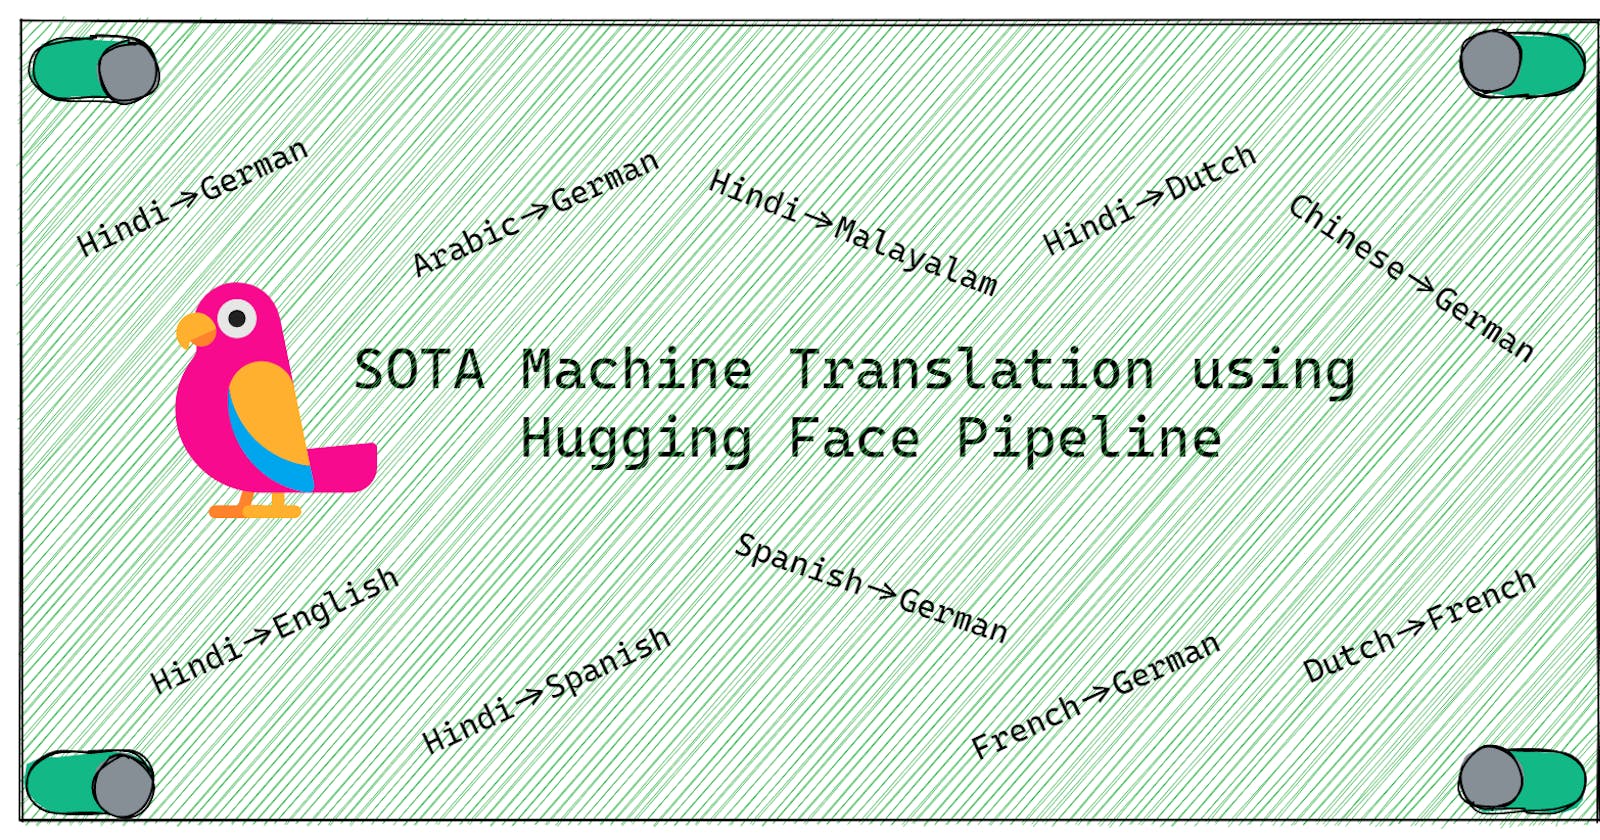 Neural Machine Translation using Hugging Face Pipeline